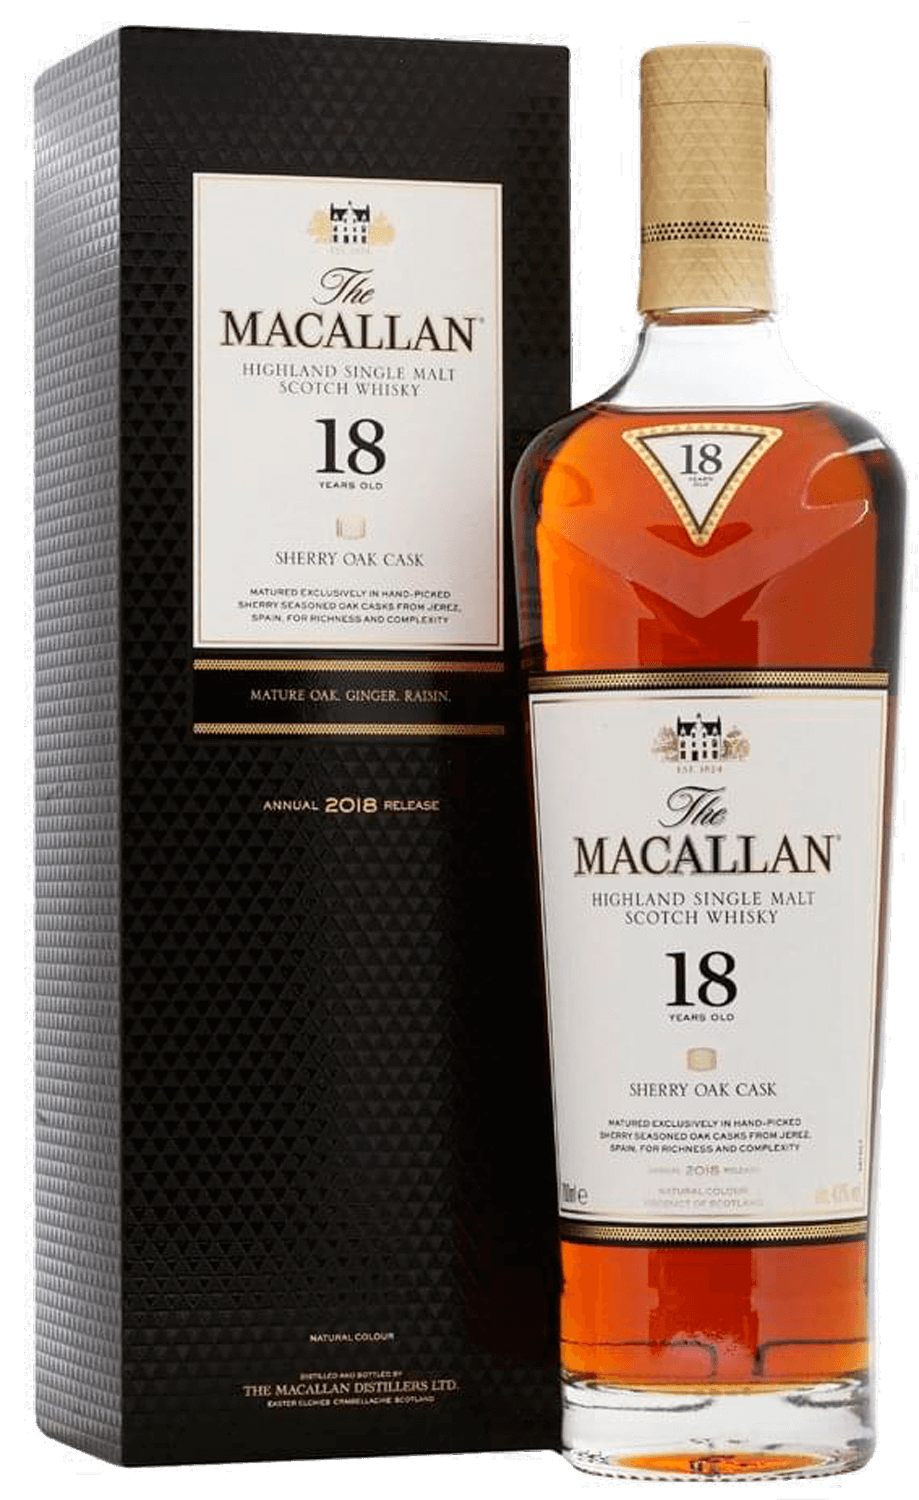 Macallan Sherry Oak Cask 18 y.o. Highland single malt scotch whisky (gift box) macallan rare cask gift box